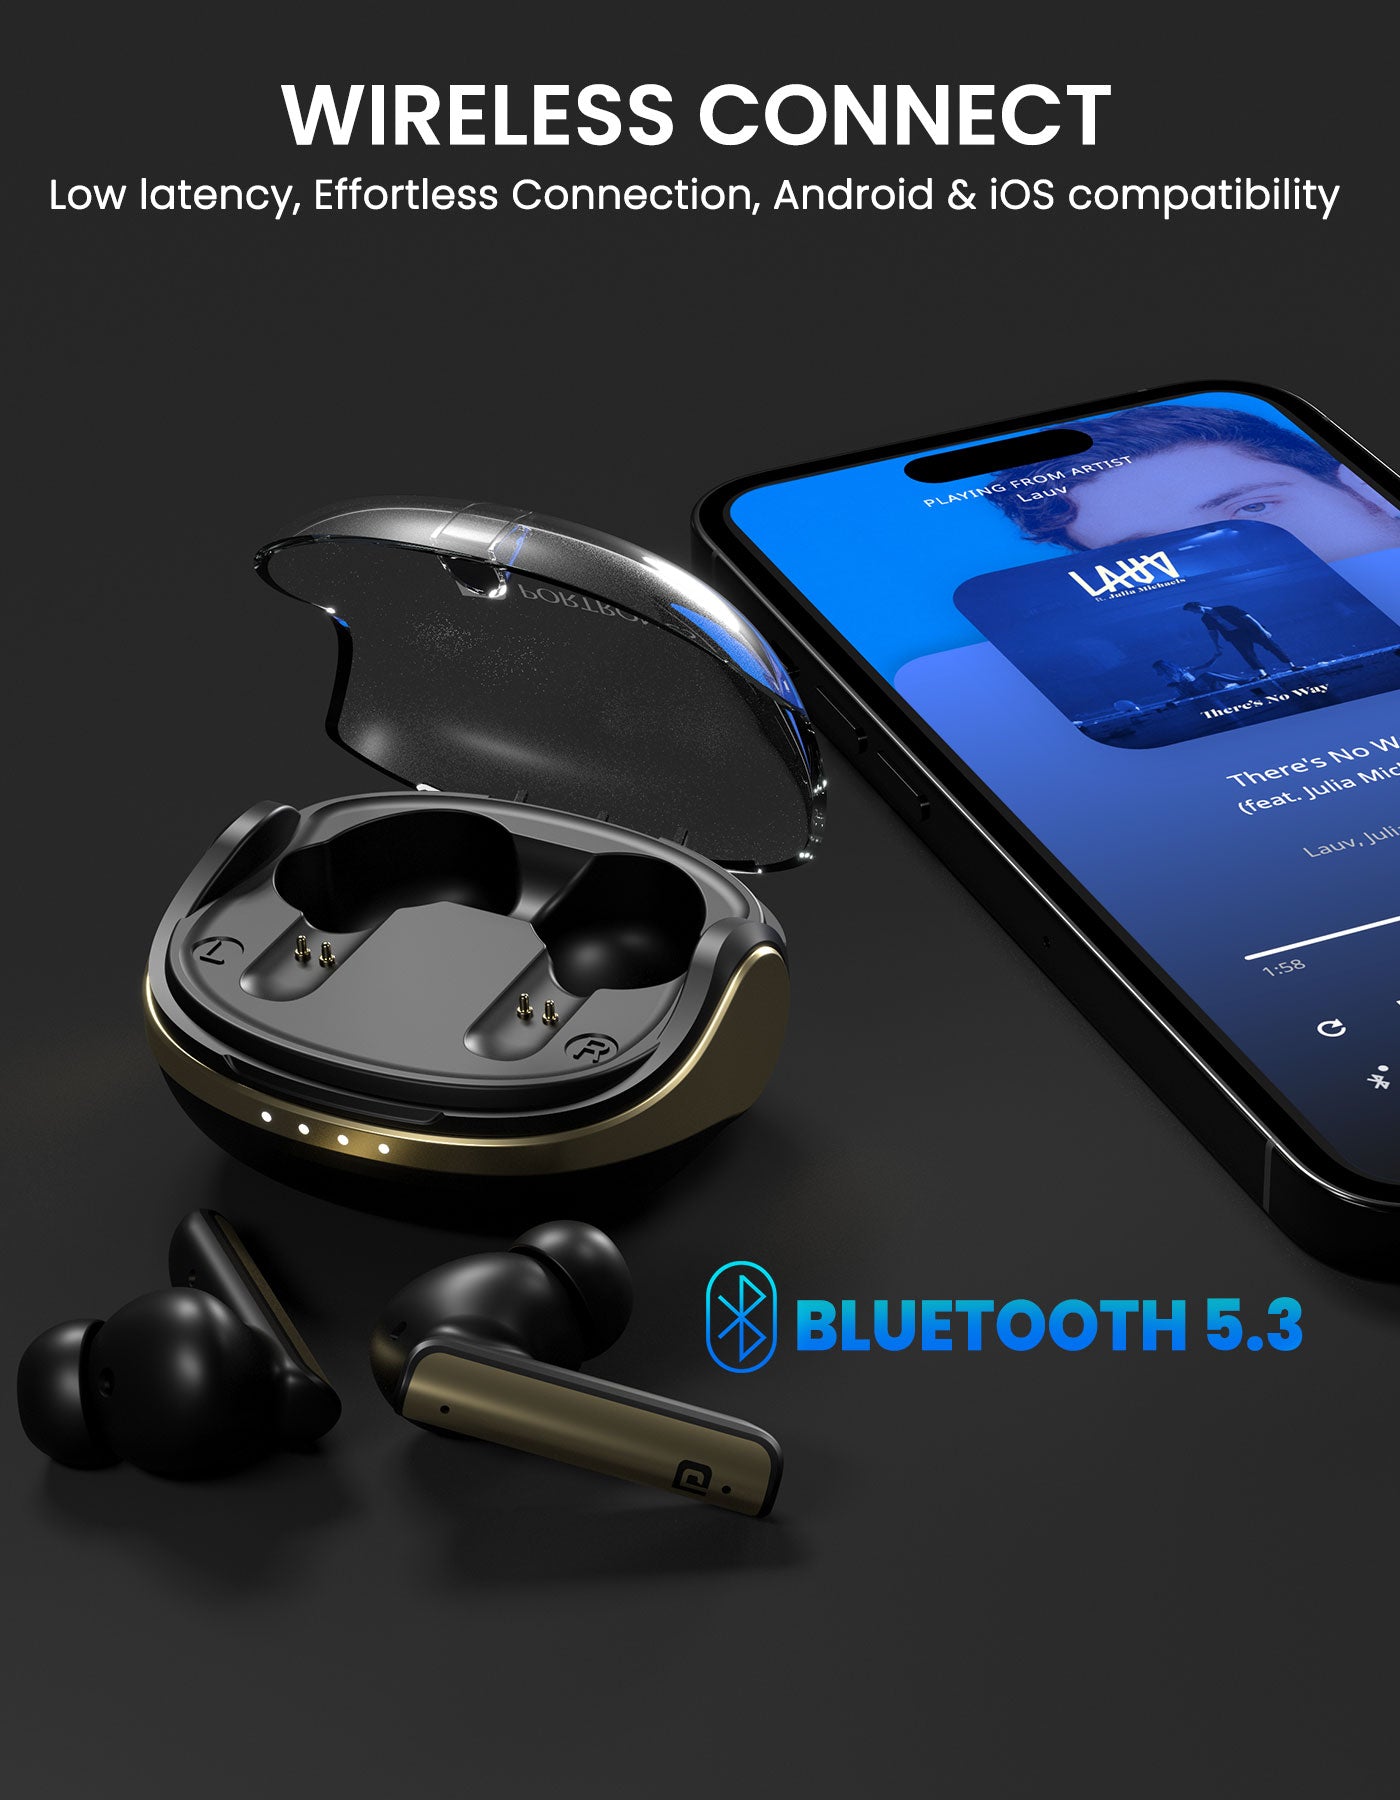 Portronics Harmonics Twins S5 Bluetooth Earbuds with LED display